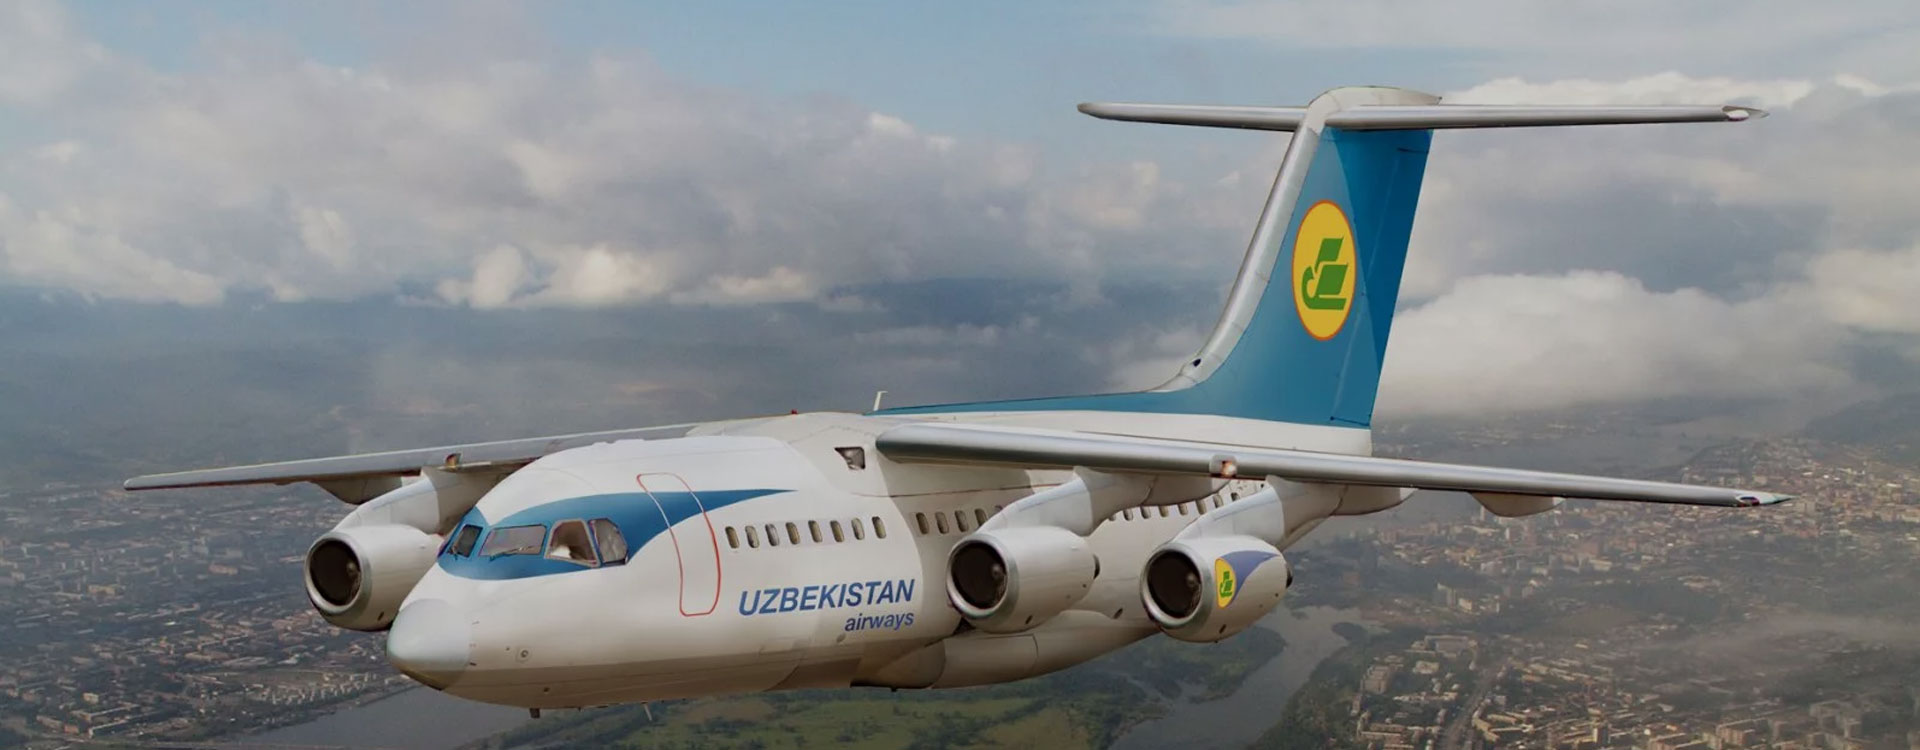 Air Tourism In Uzbekistan